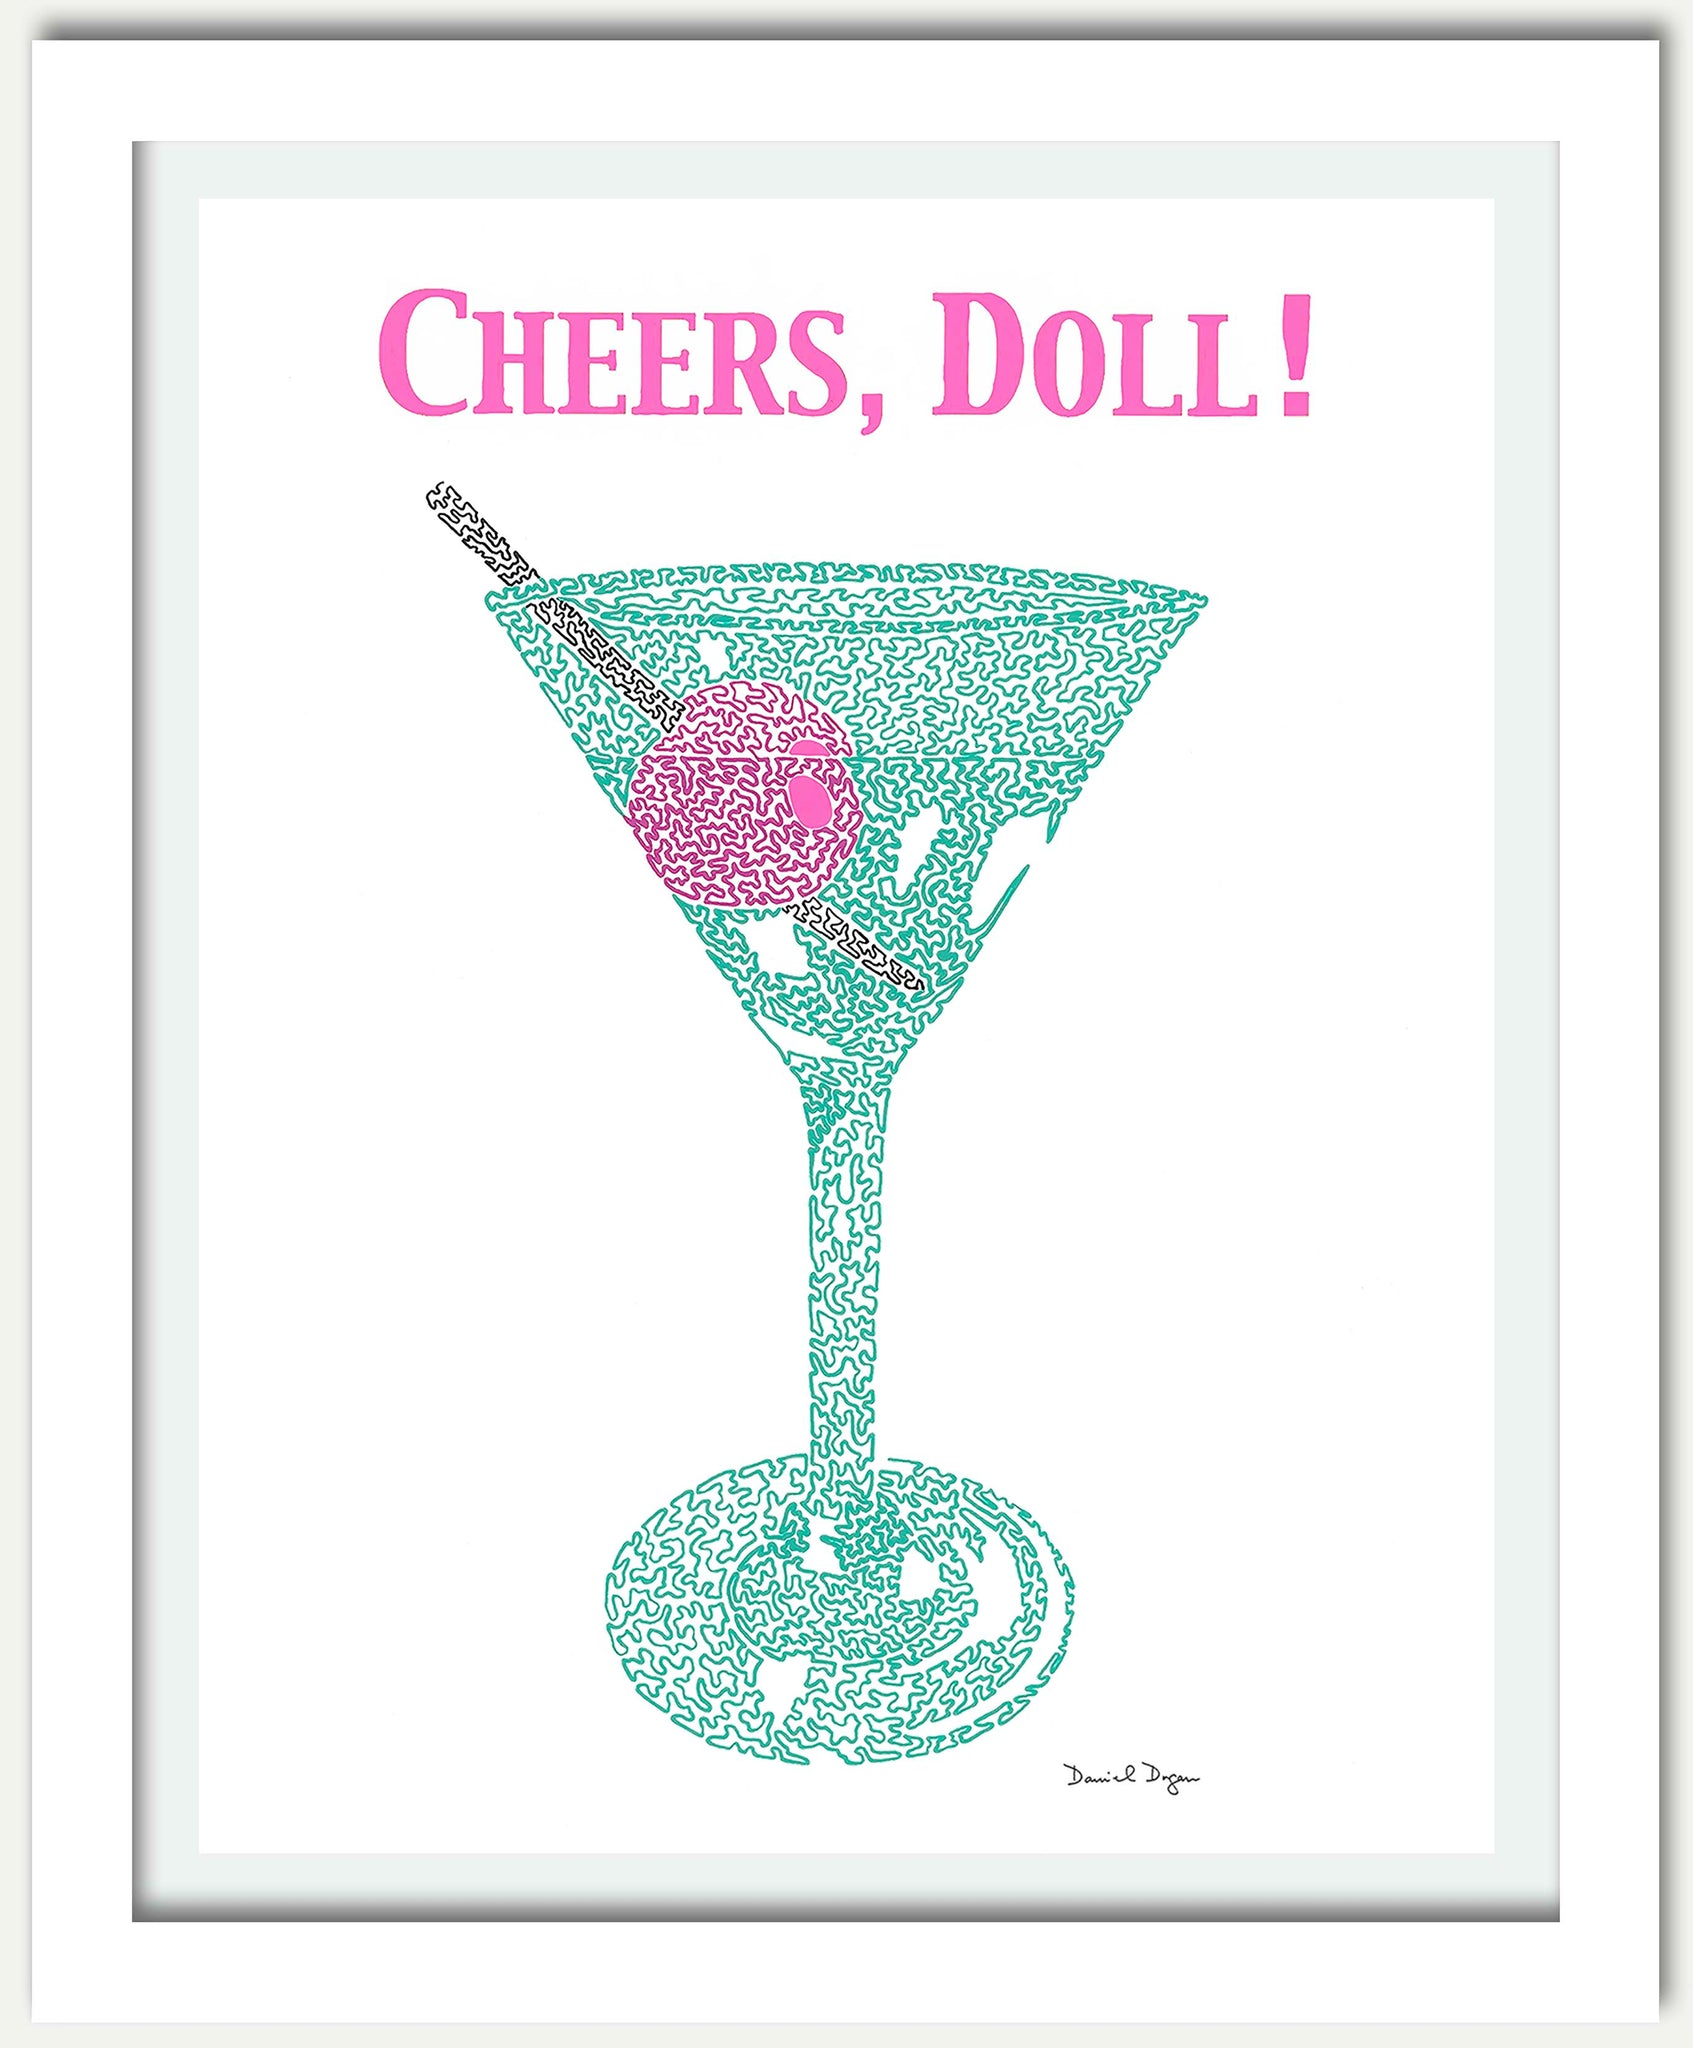 Daniel Dugan, "Cheers Doll!"